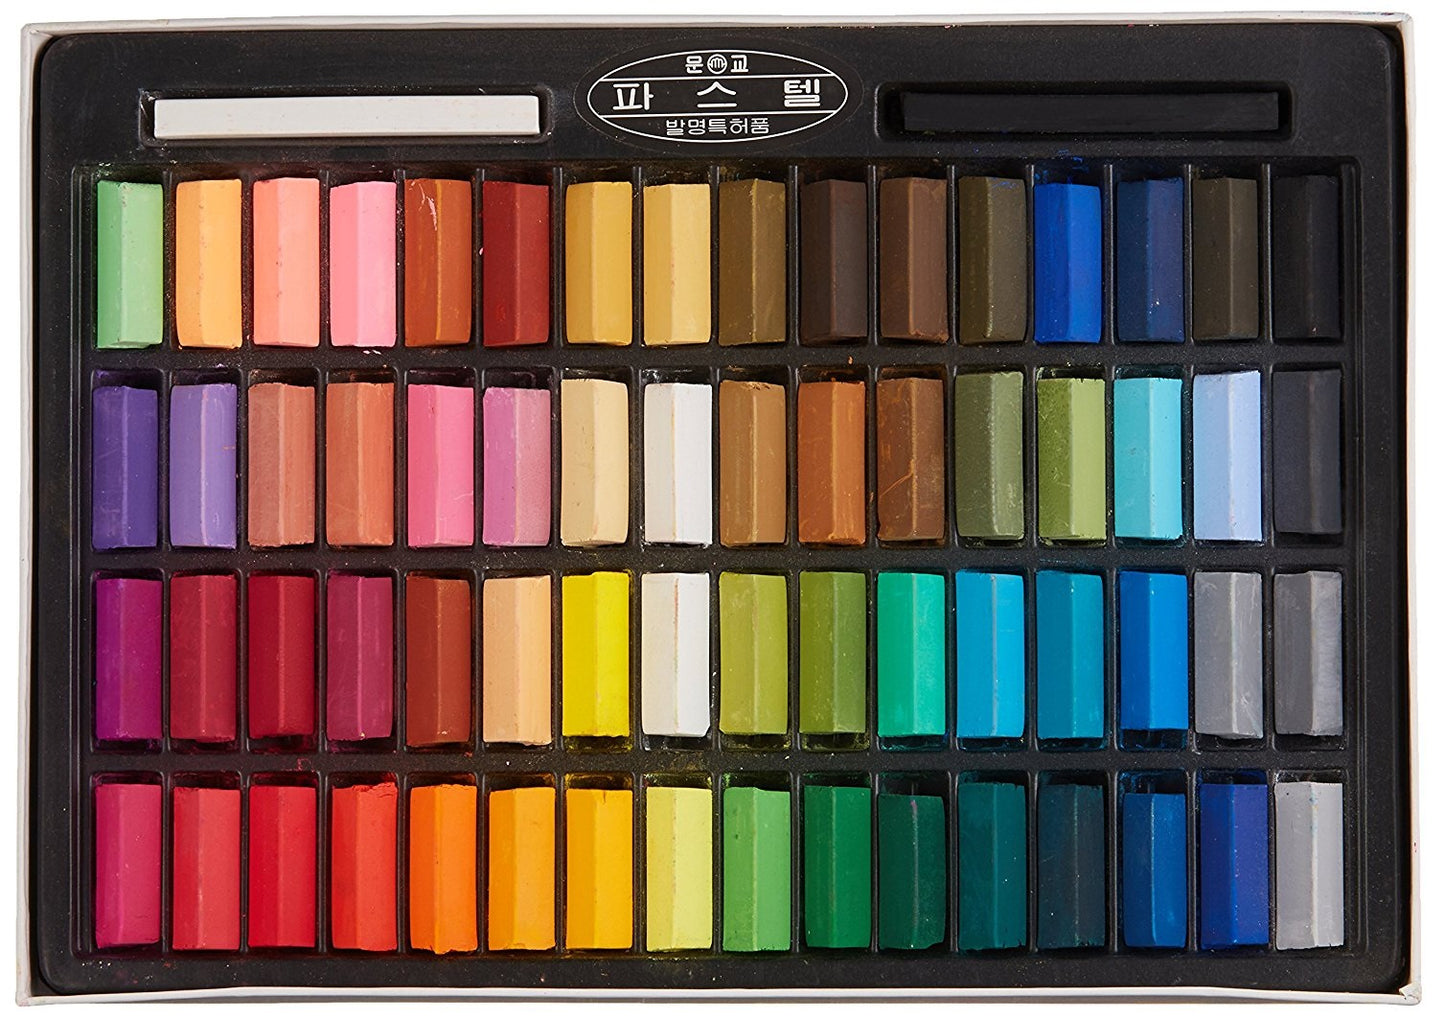 Mungyo Non Toxic Mungyo Soft Pastel Set of 64 Assorted Colors Square Chalk